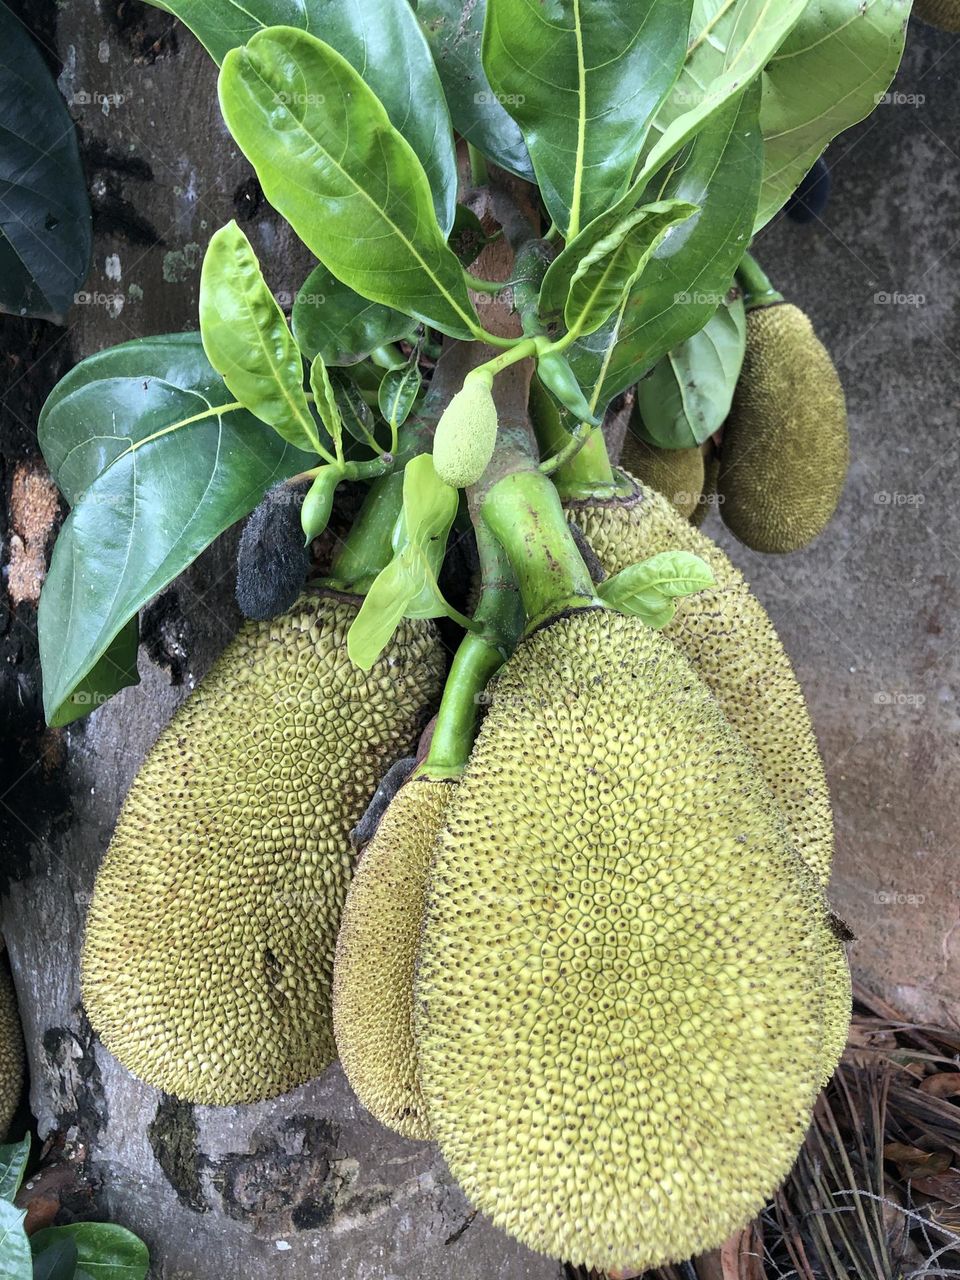 Jacas. Frutas tropicais. Brasil.